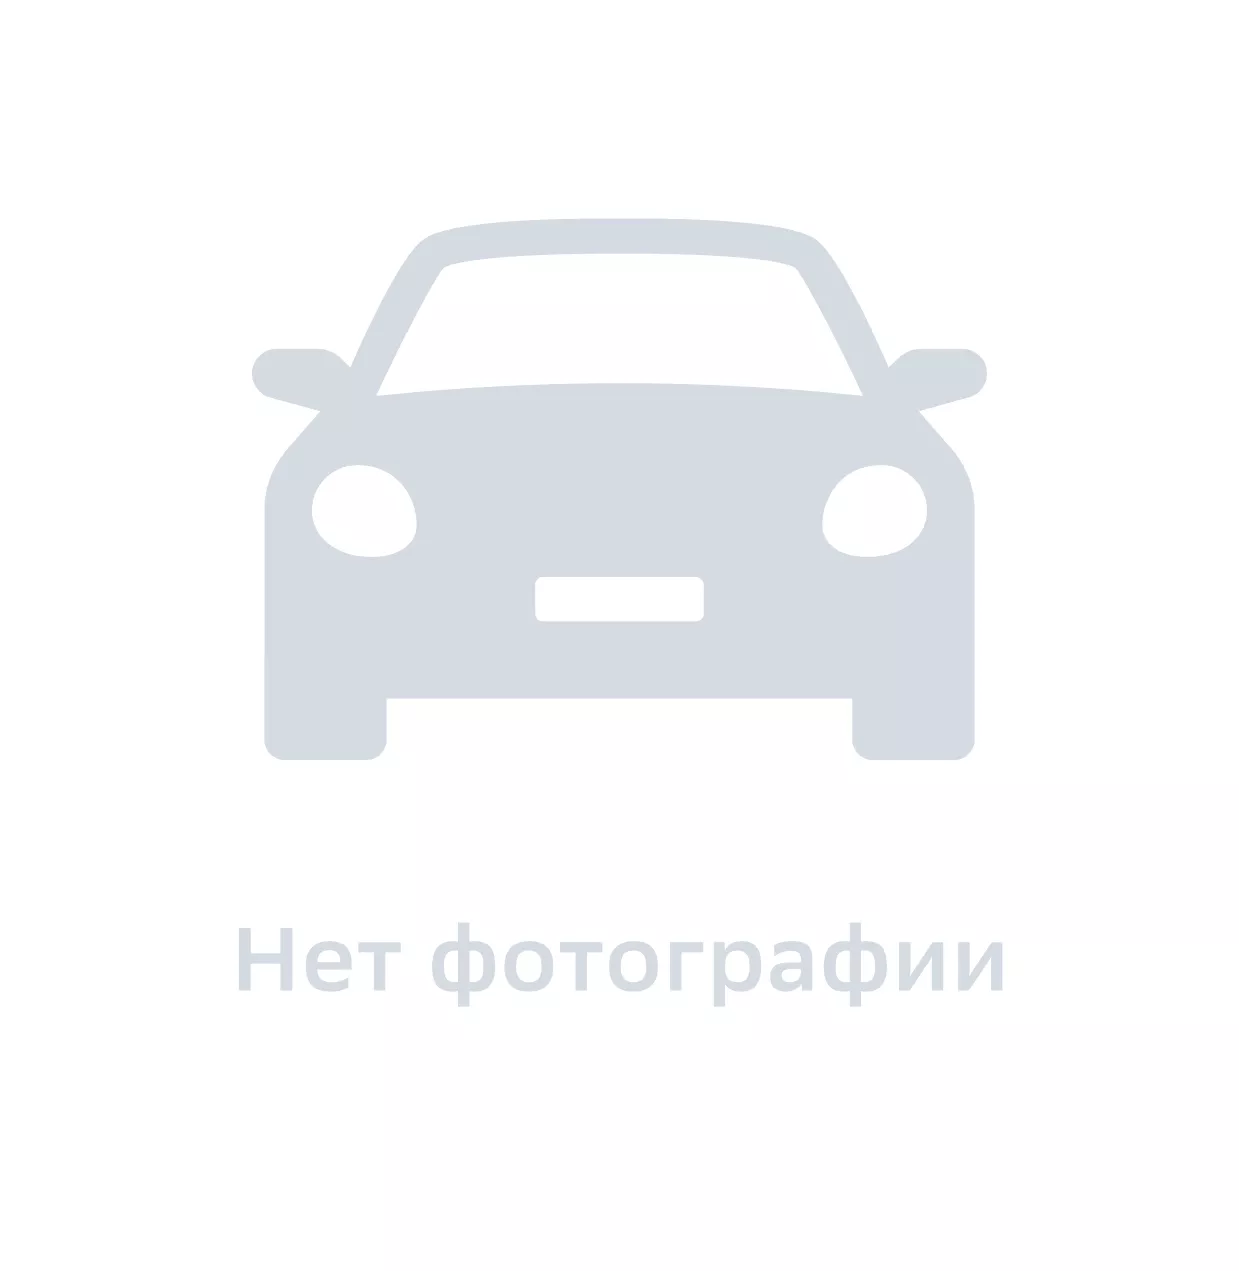 Хомут автомобильный, Hyundai-KIA, арт. K992761408, цена за 1 шт.